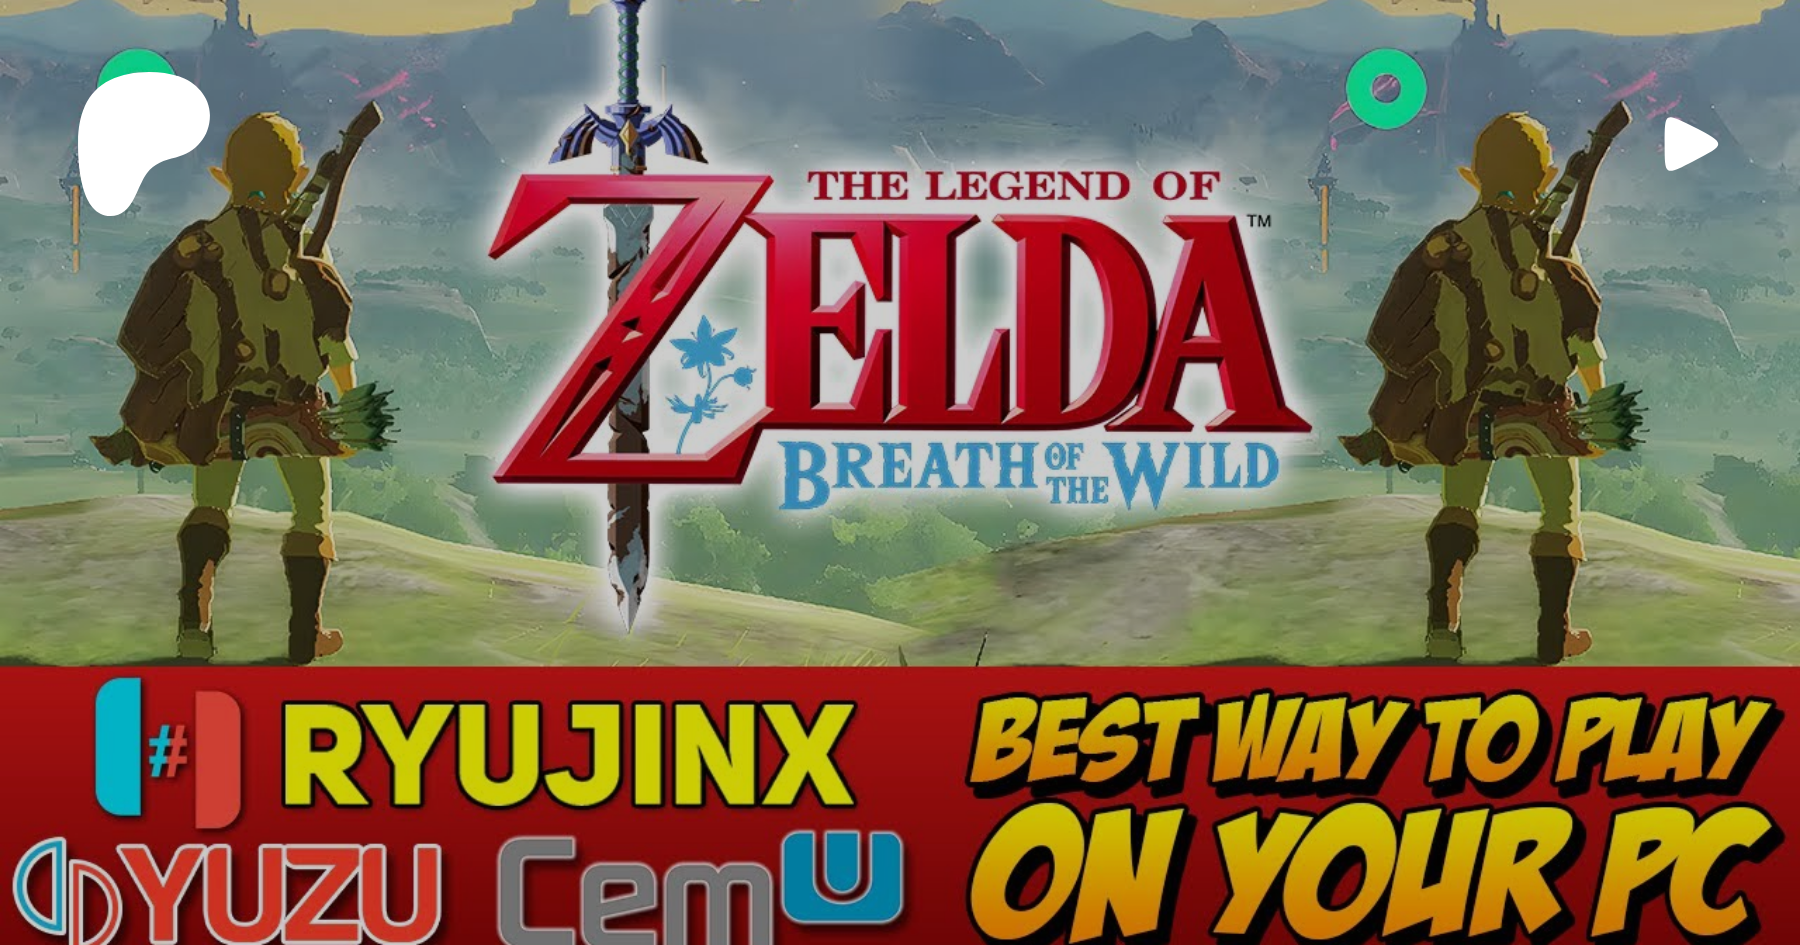 RYUJINX Vs CEMU Vs YUZU - Best emulator to play ZELDA BREATH OF THE WILD in  PC? Perf. Test